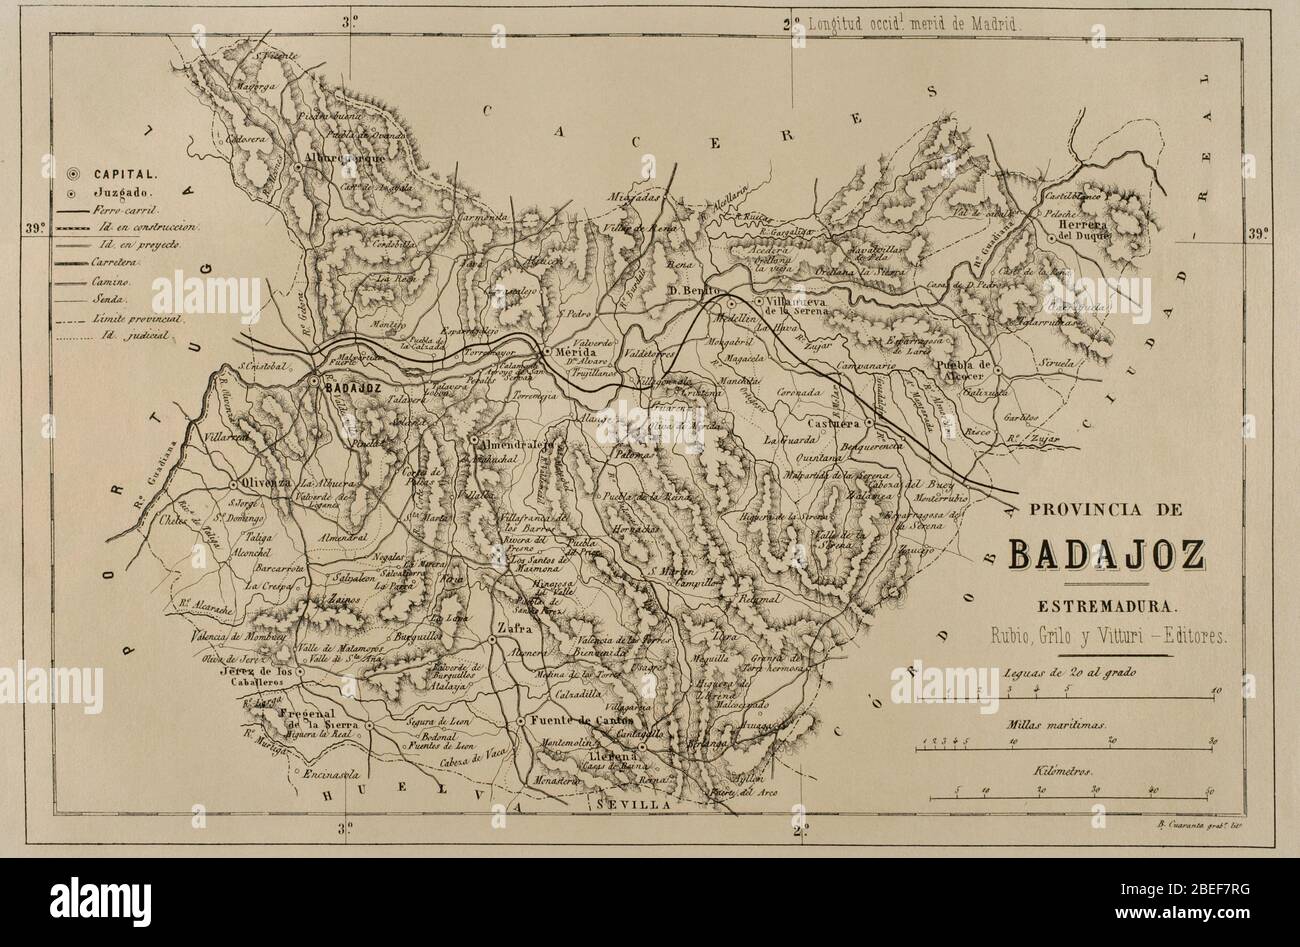 Map of the province of Badajoz. Stock Photo